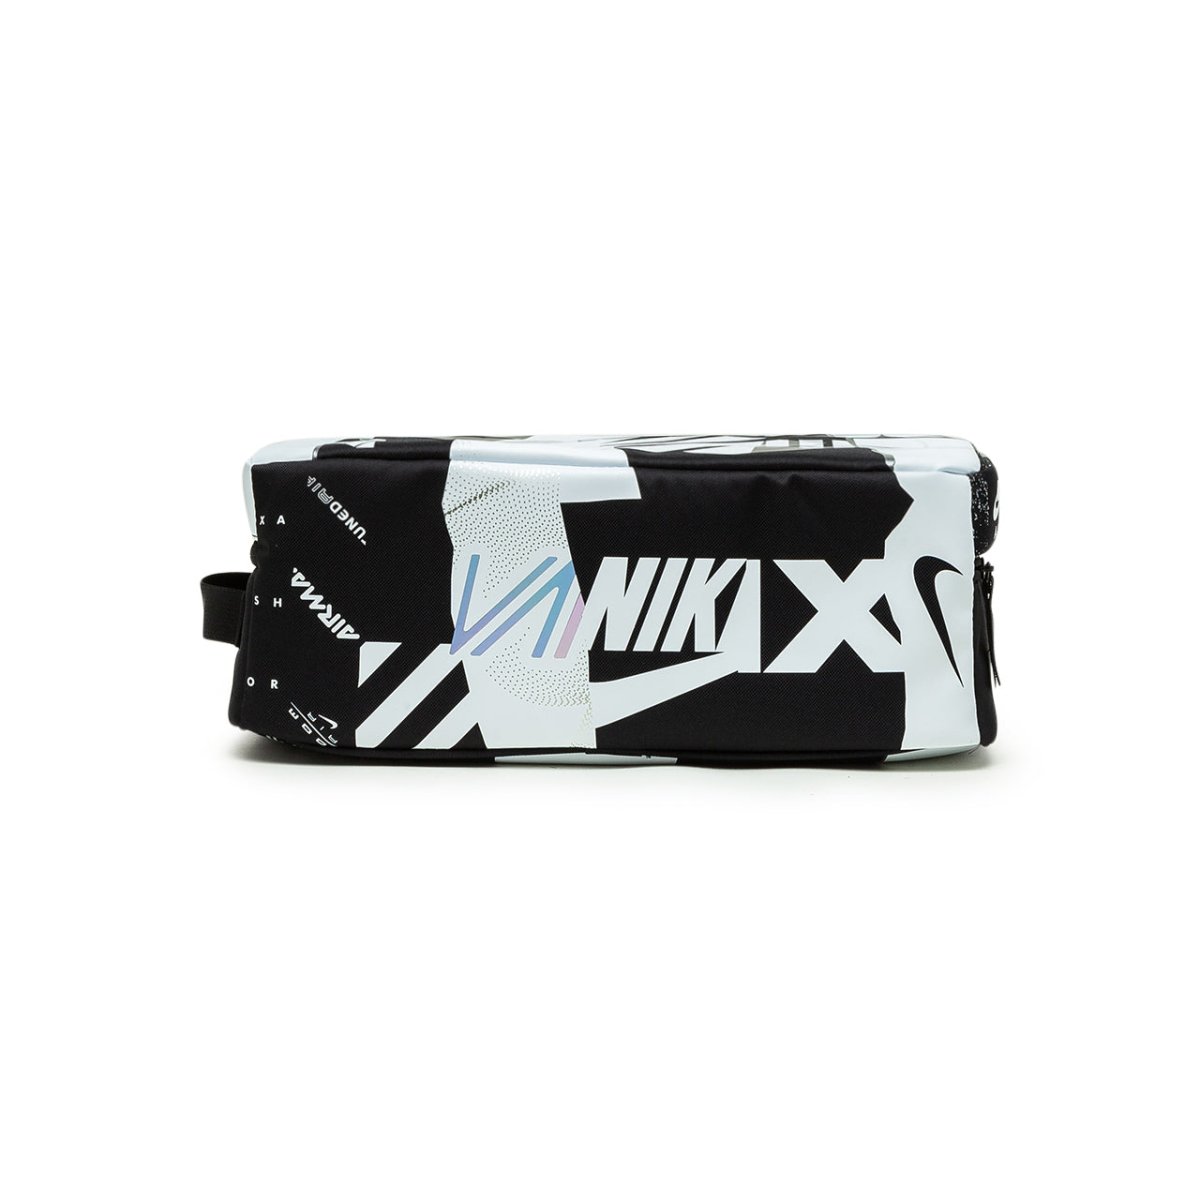 Nike Shoebox Bag (Schwarz / Weiß)  - Allike Store